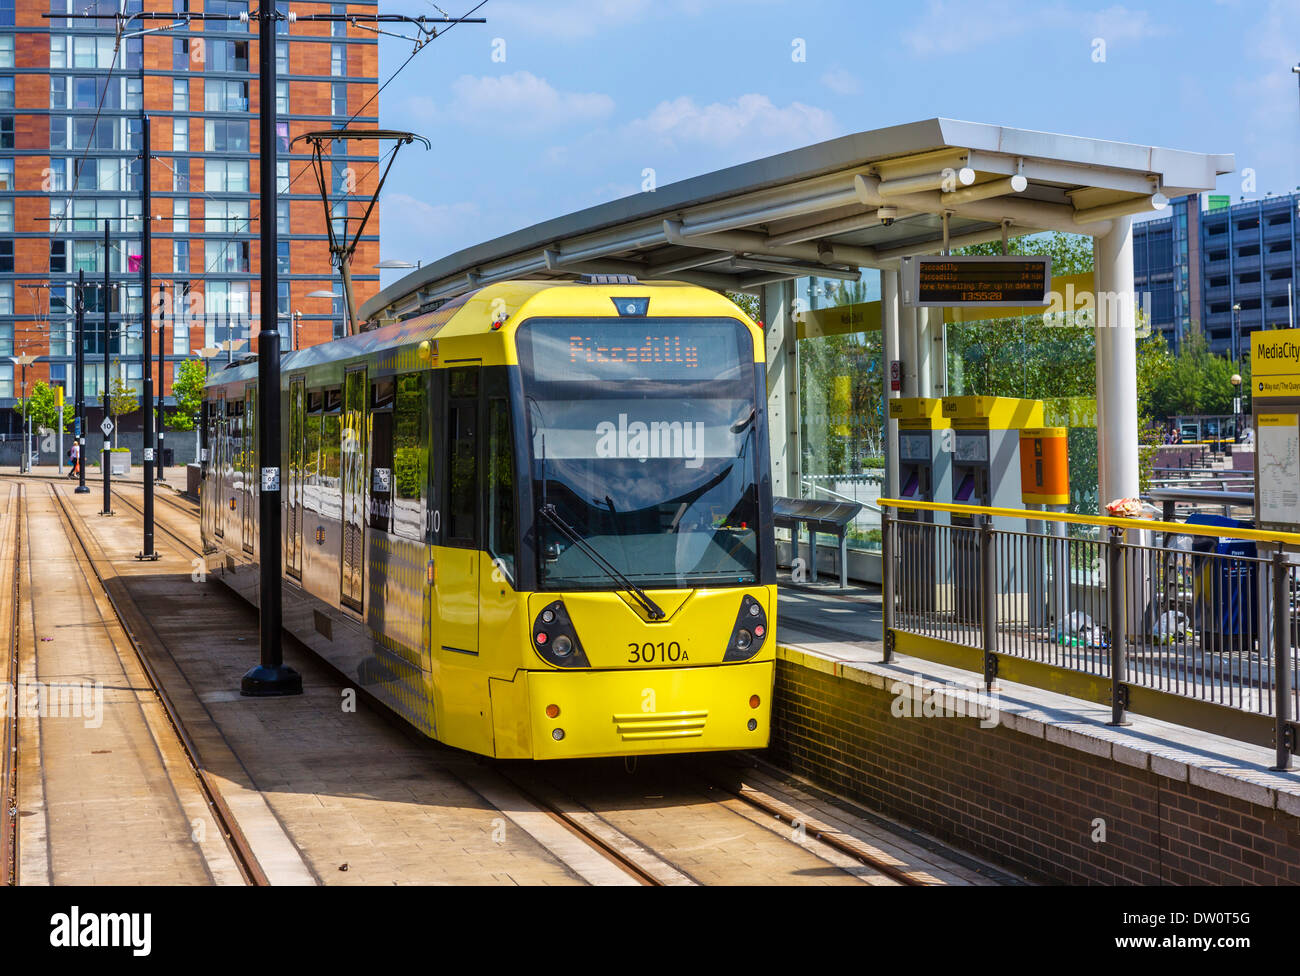 Metrolink light rail train at MediacityUK station, Salford Quays, Manchester, England, UK Stock Photo